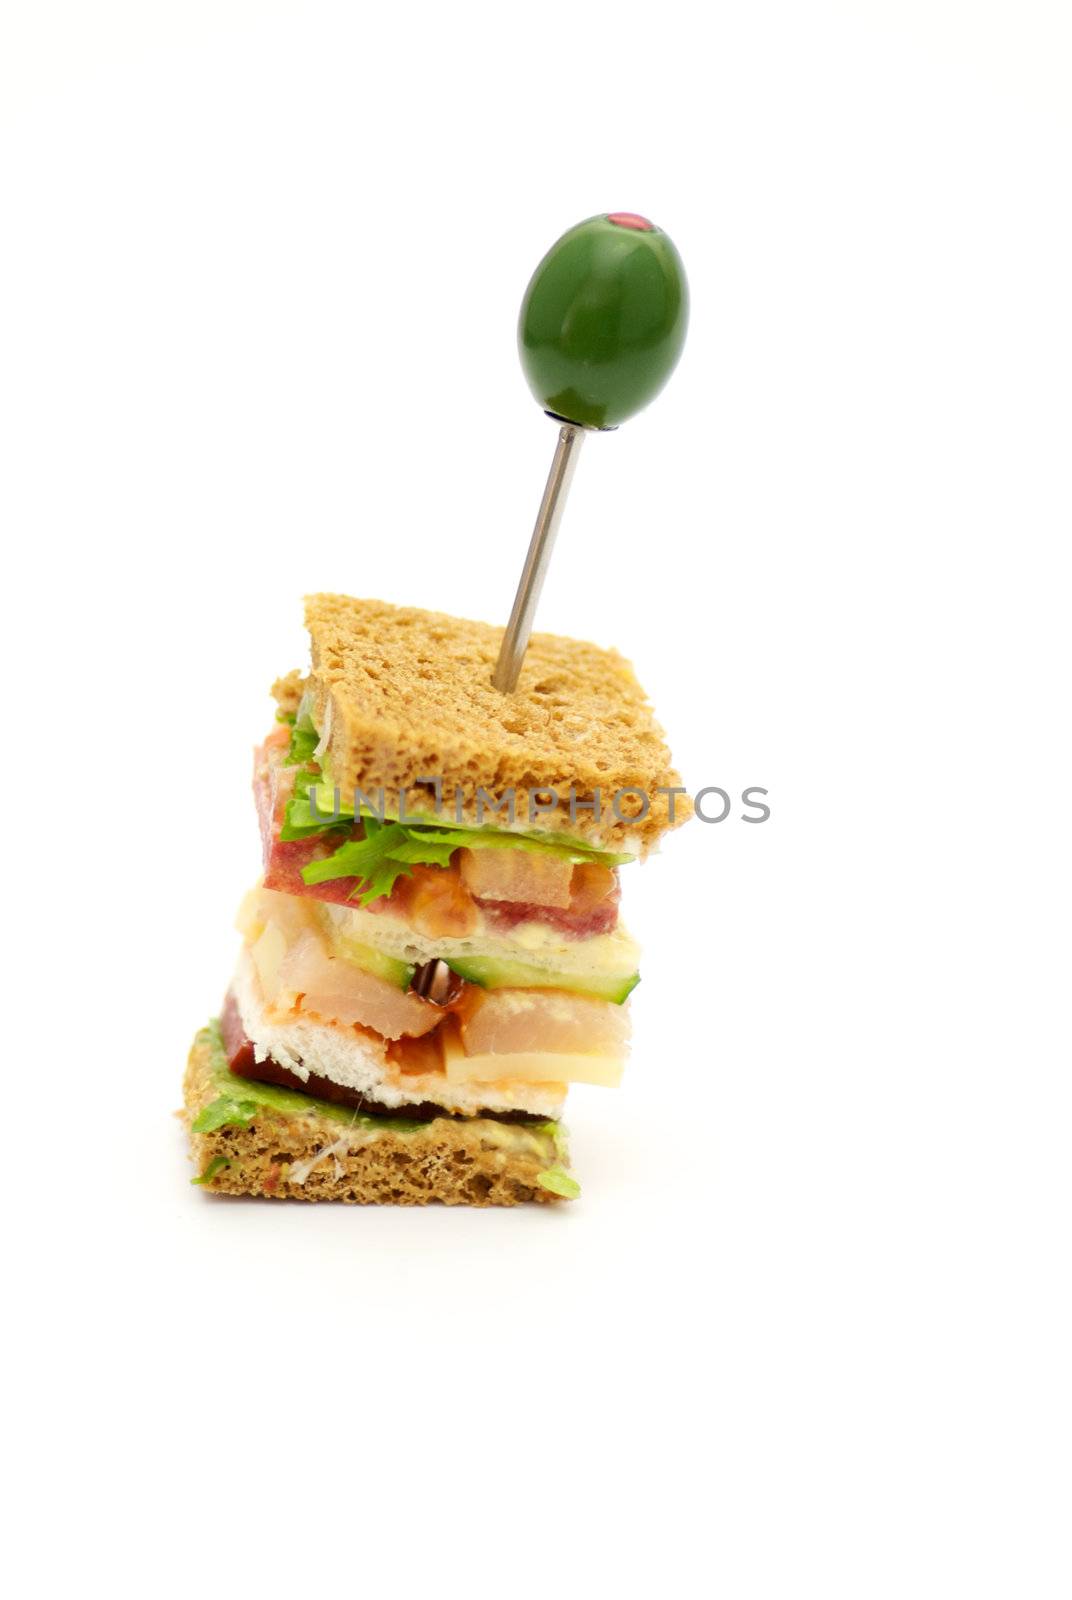 Snack of Classical BLT Club Sandwich by zhekos